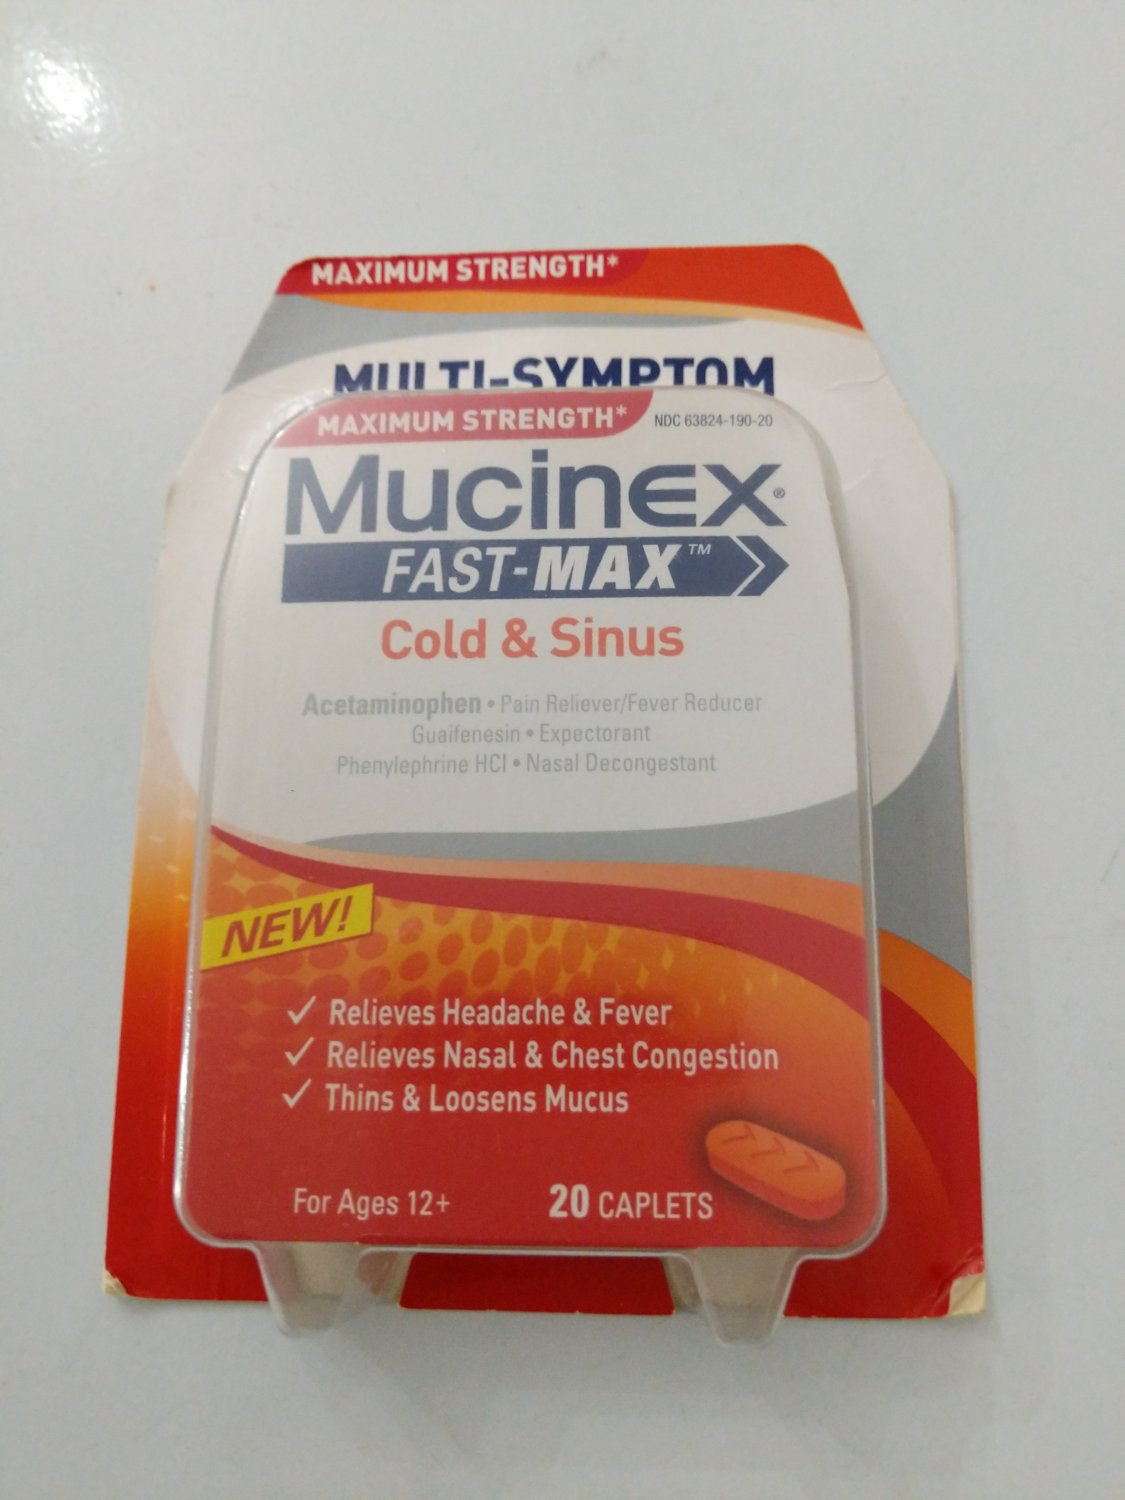 Mucinex Fast-Max Cold & Sinus 20 Caplets Maximun Strength EXPIRED EXPIRED EXPIRED